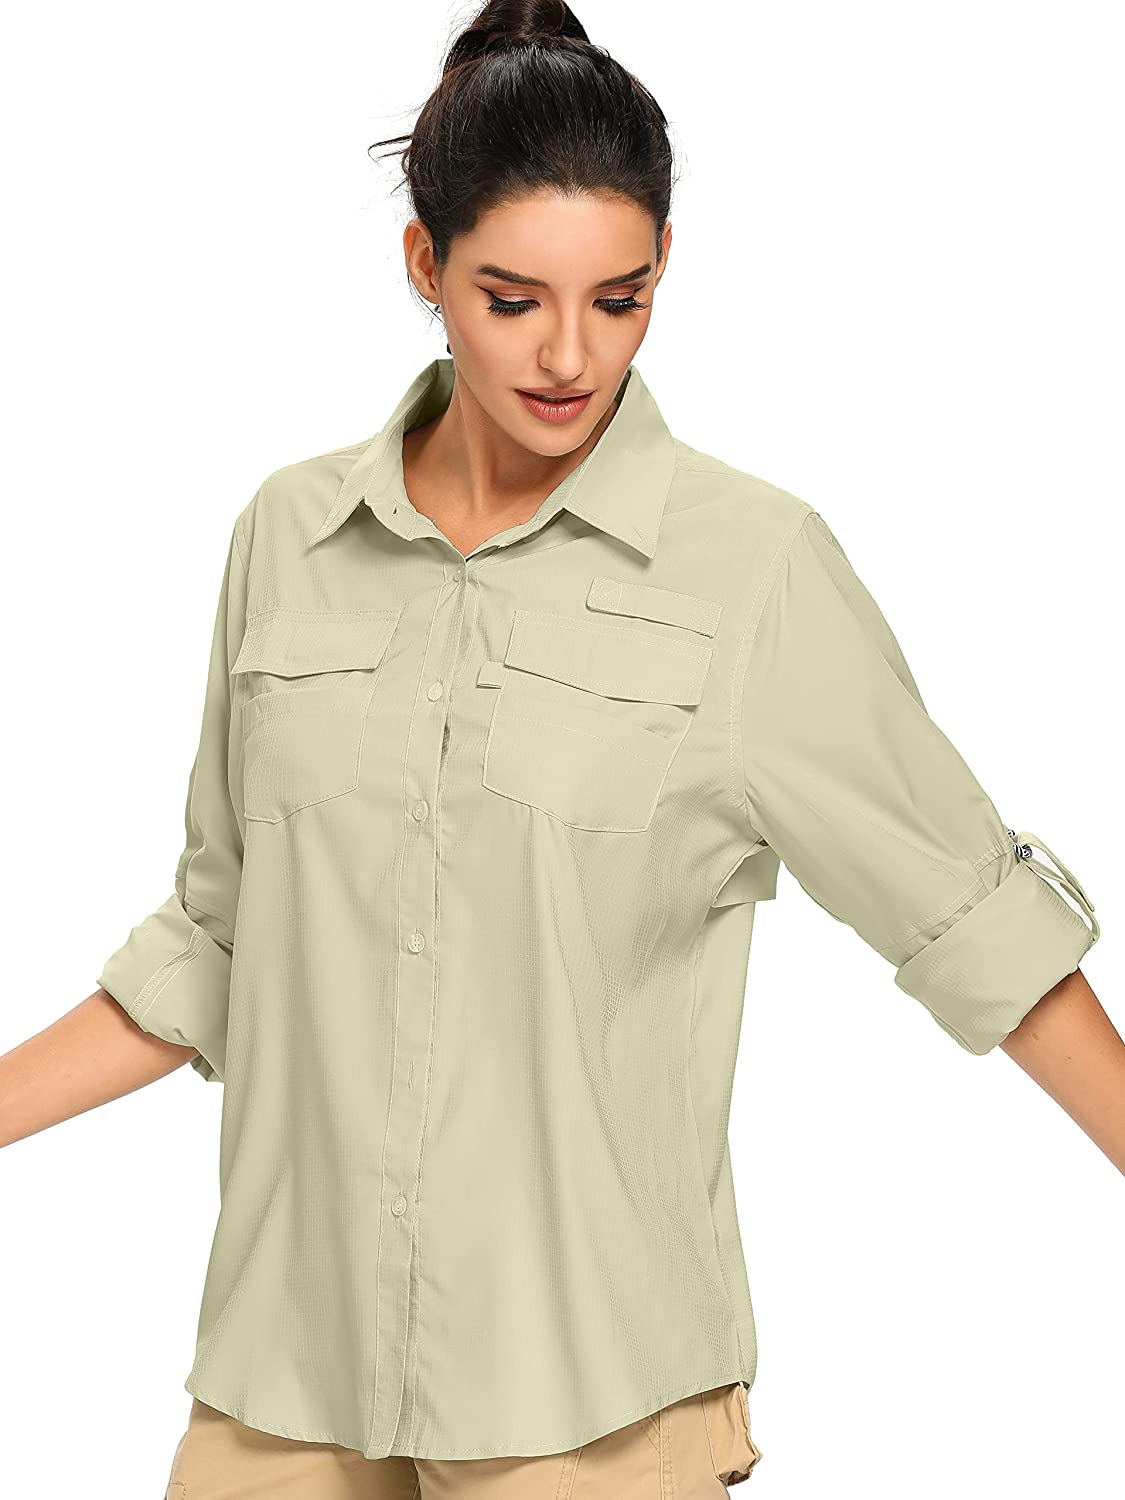 Women's UPF 50+ UV Sun Protection Shirt, Long Sleeve Fishing